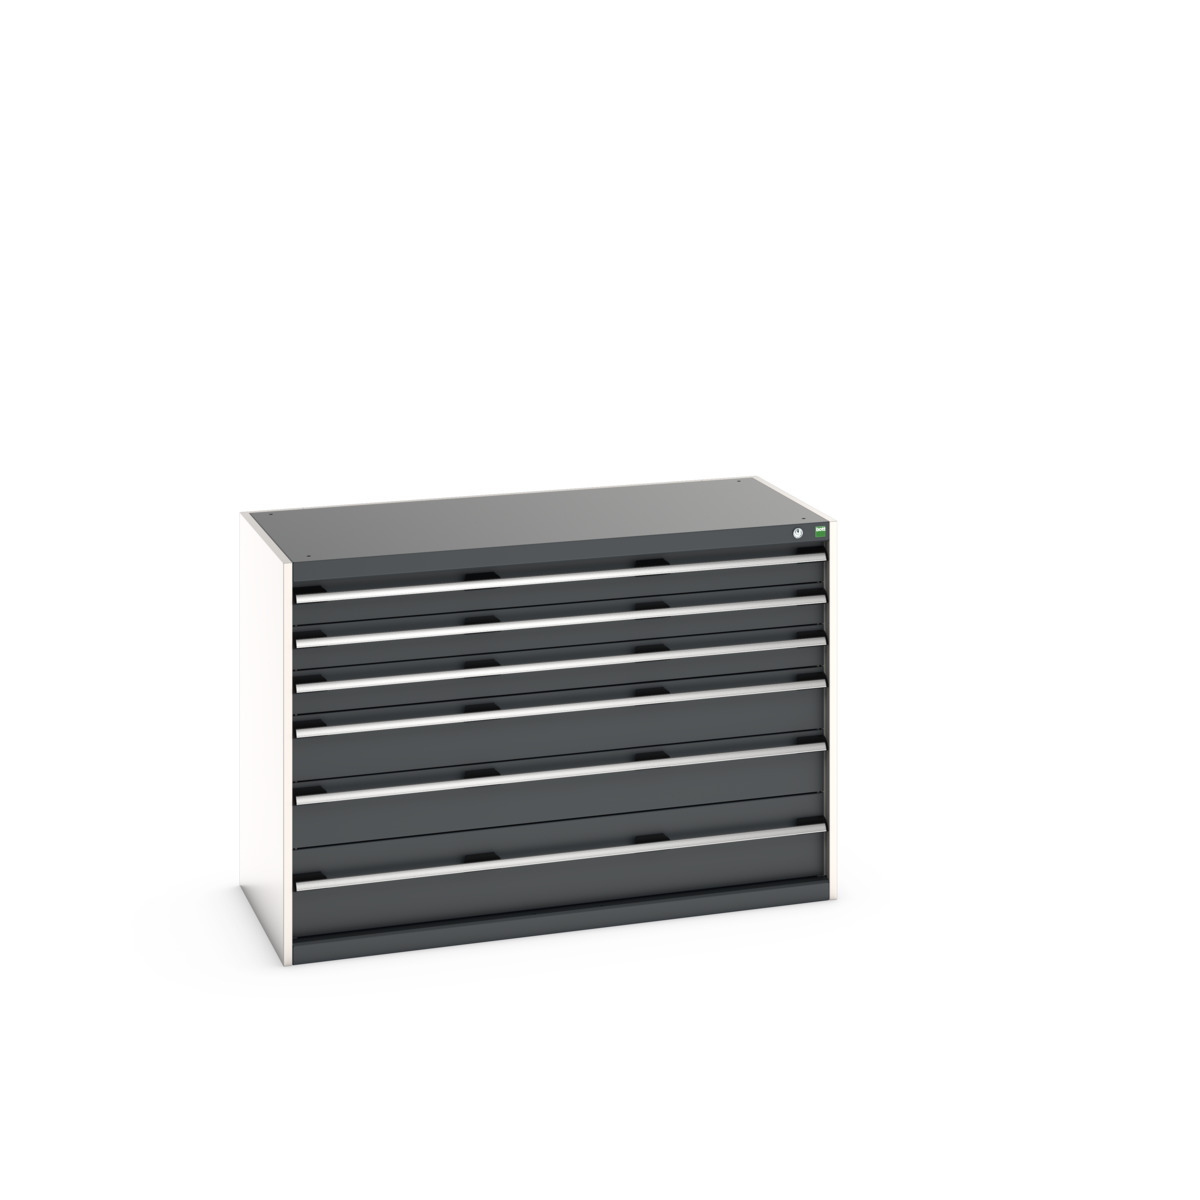 40022116. - cubio drawer cabinet